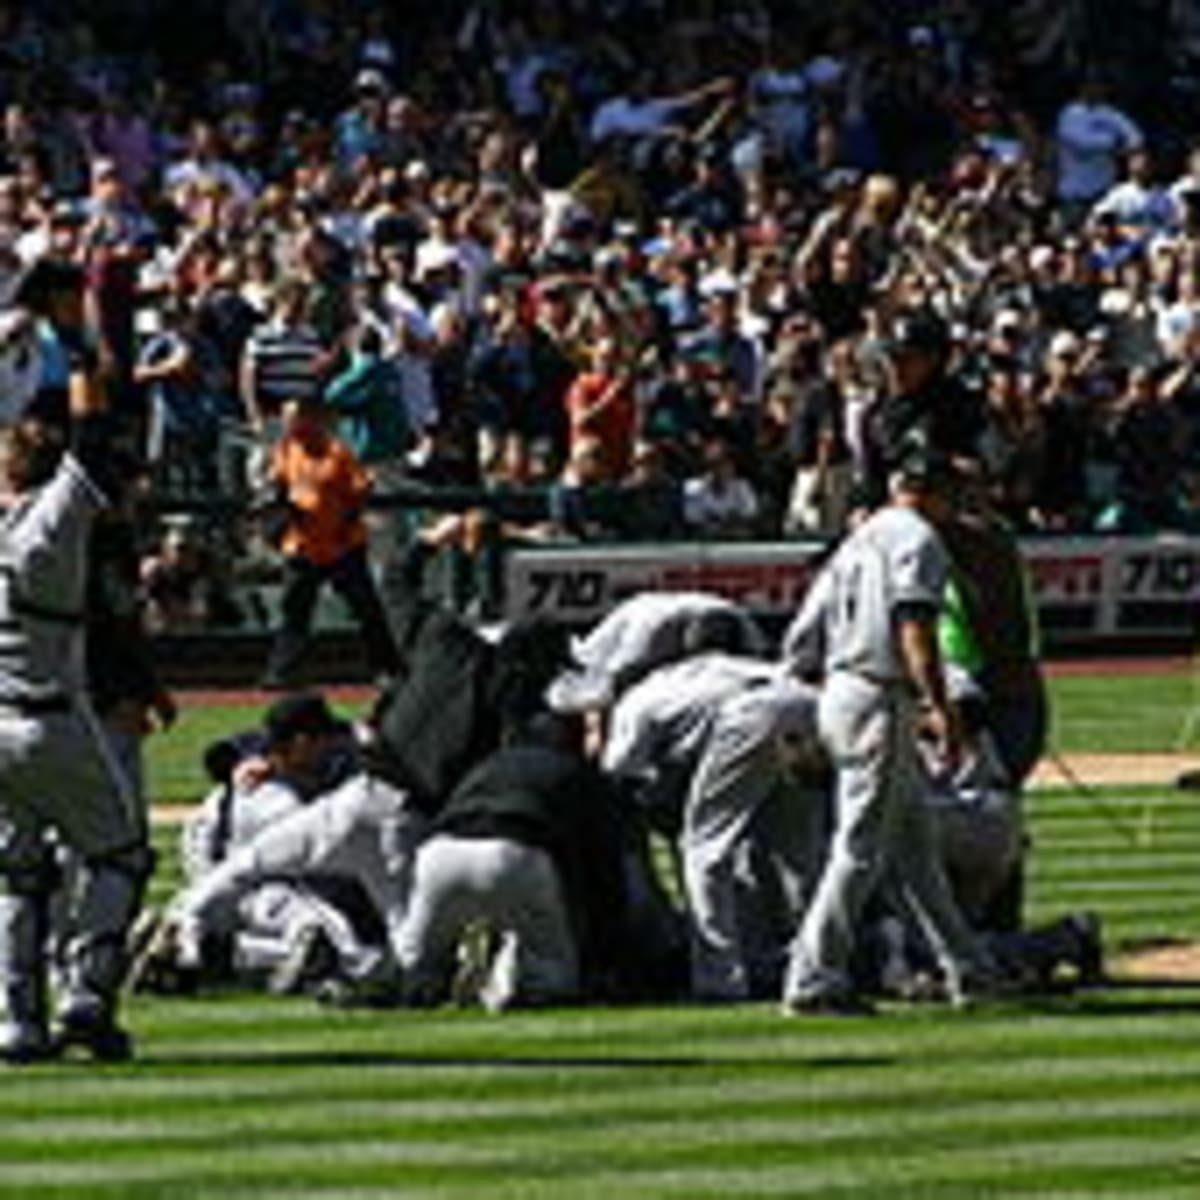 Chicago White Sox, Baseball Wiki